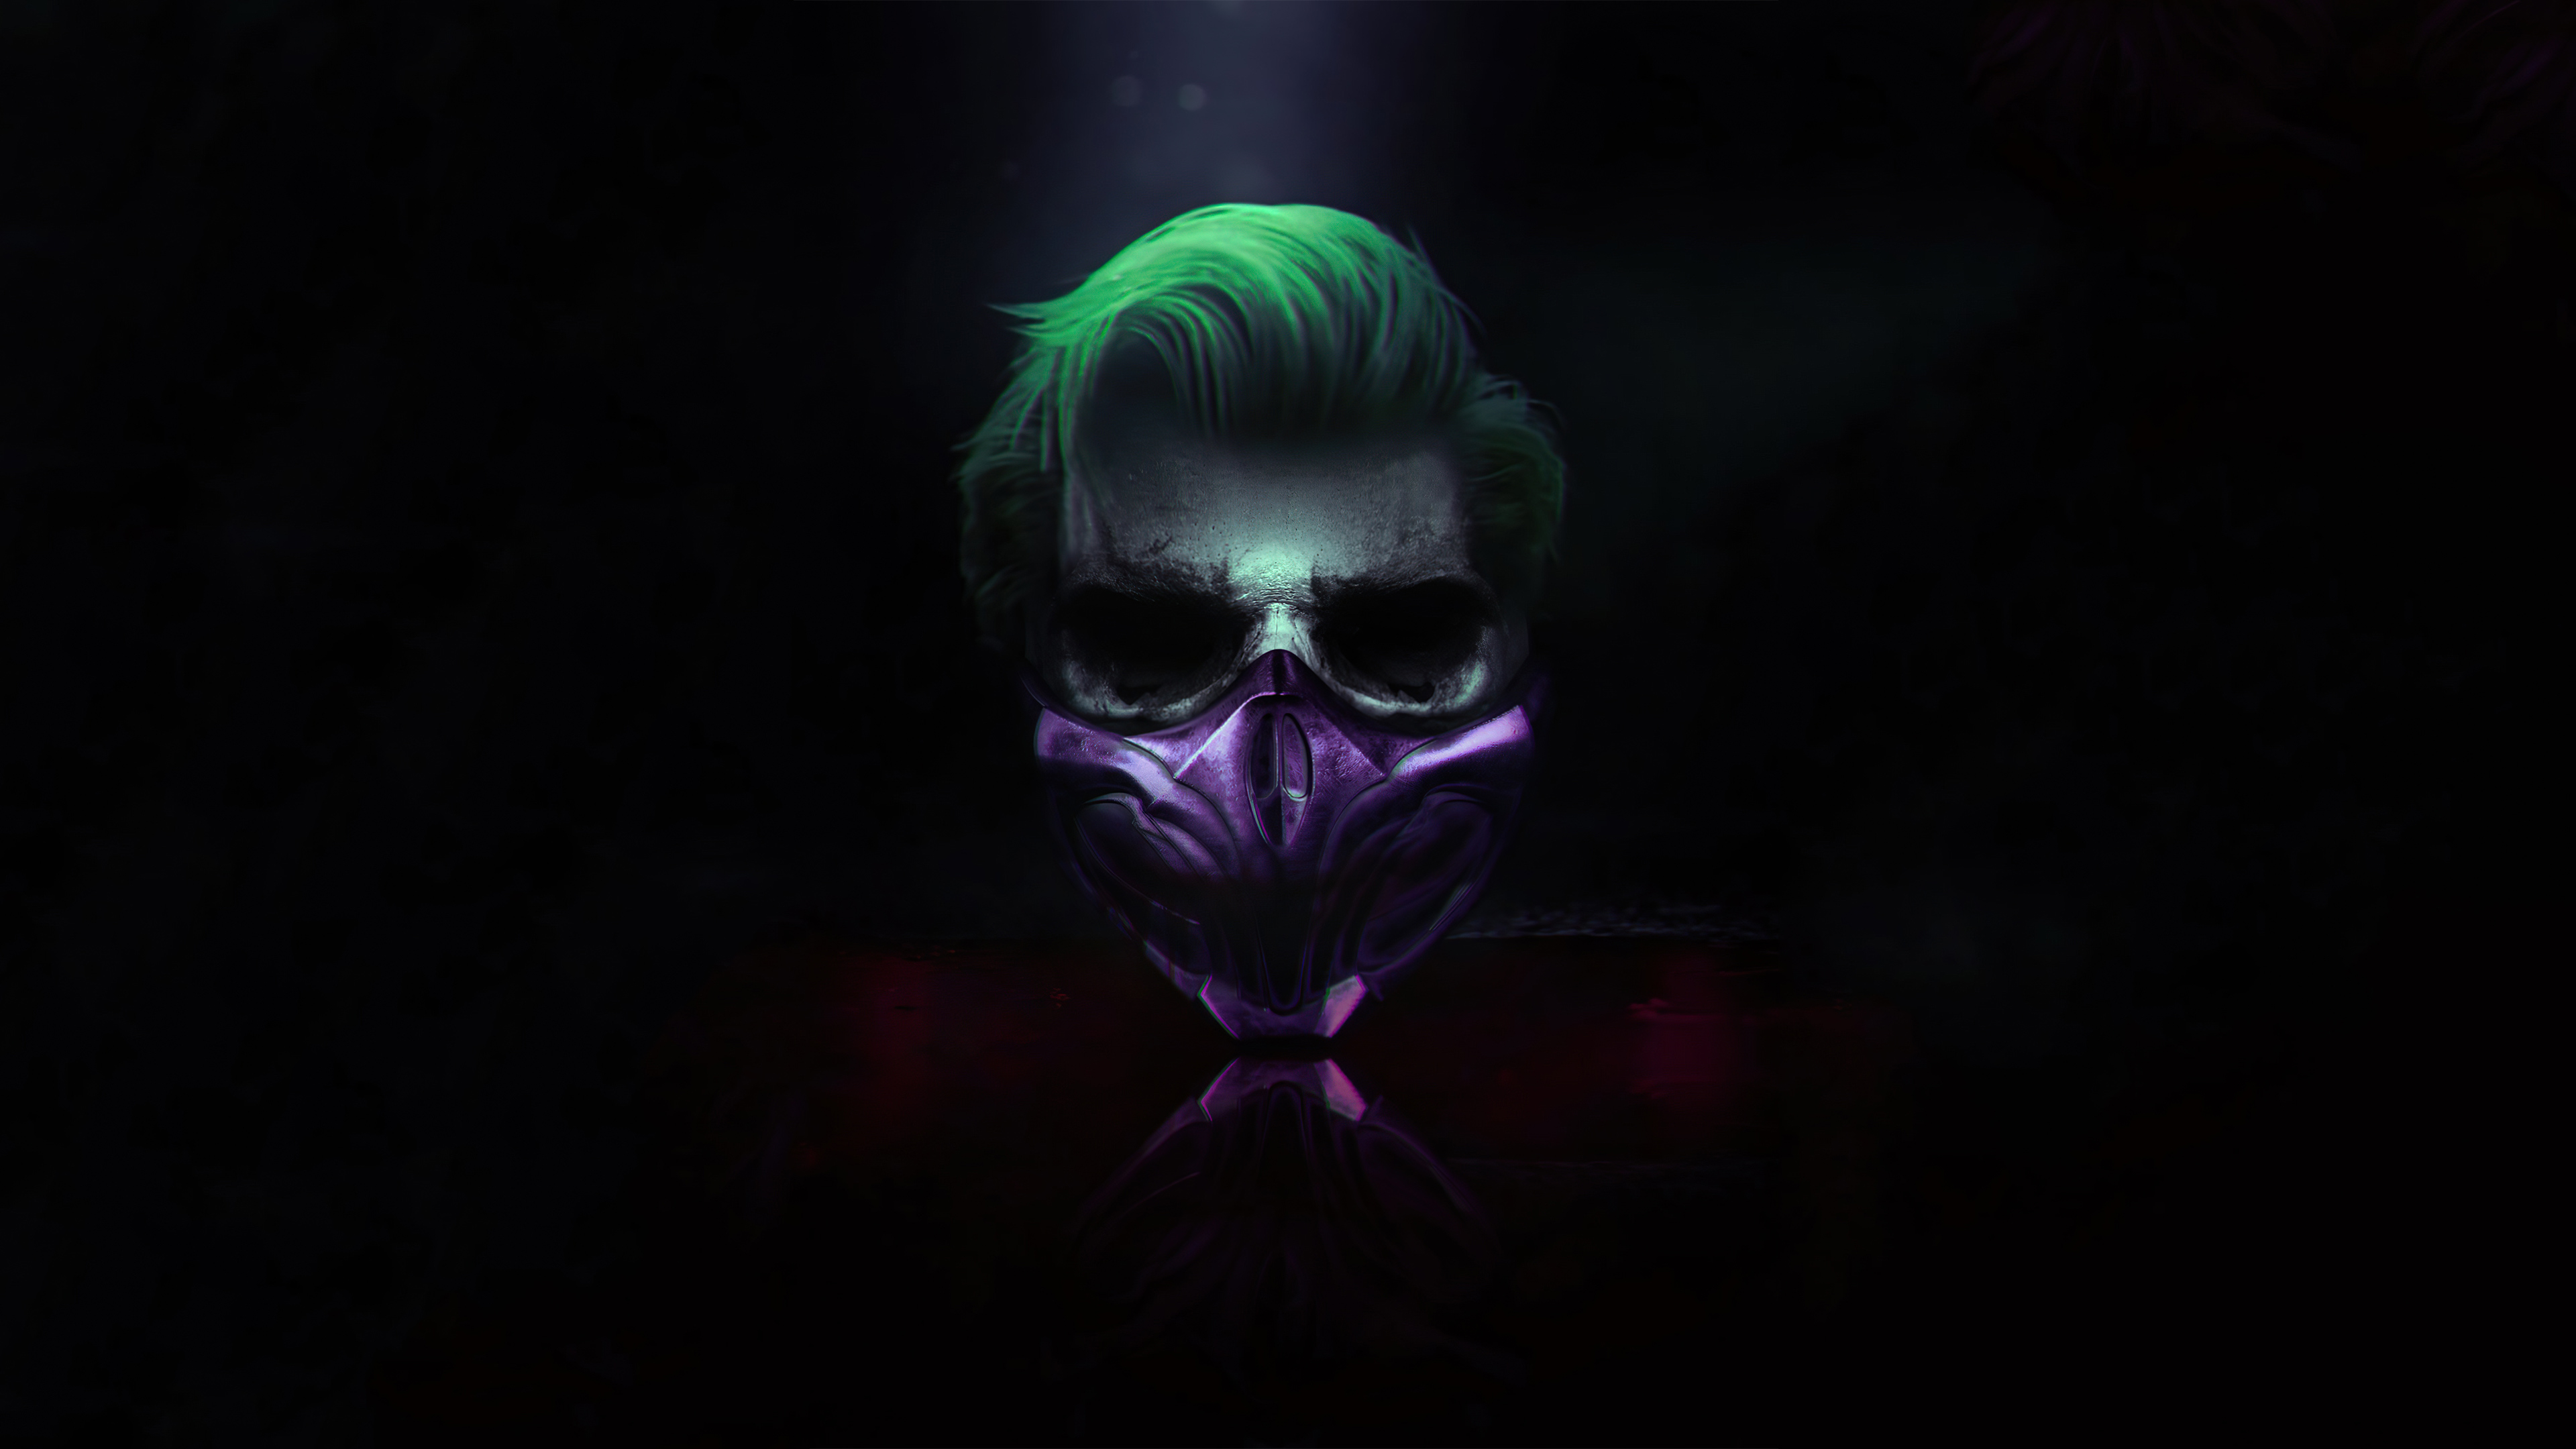 Joker Cyberpunk Mask Wallpaper Hd Superheroes 4k Wallpapers Images